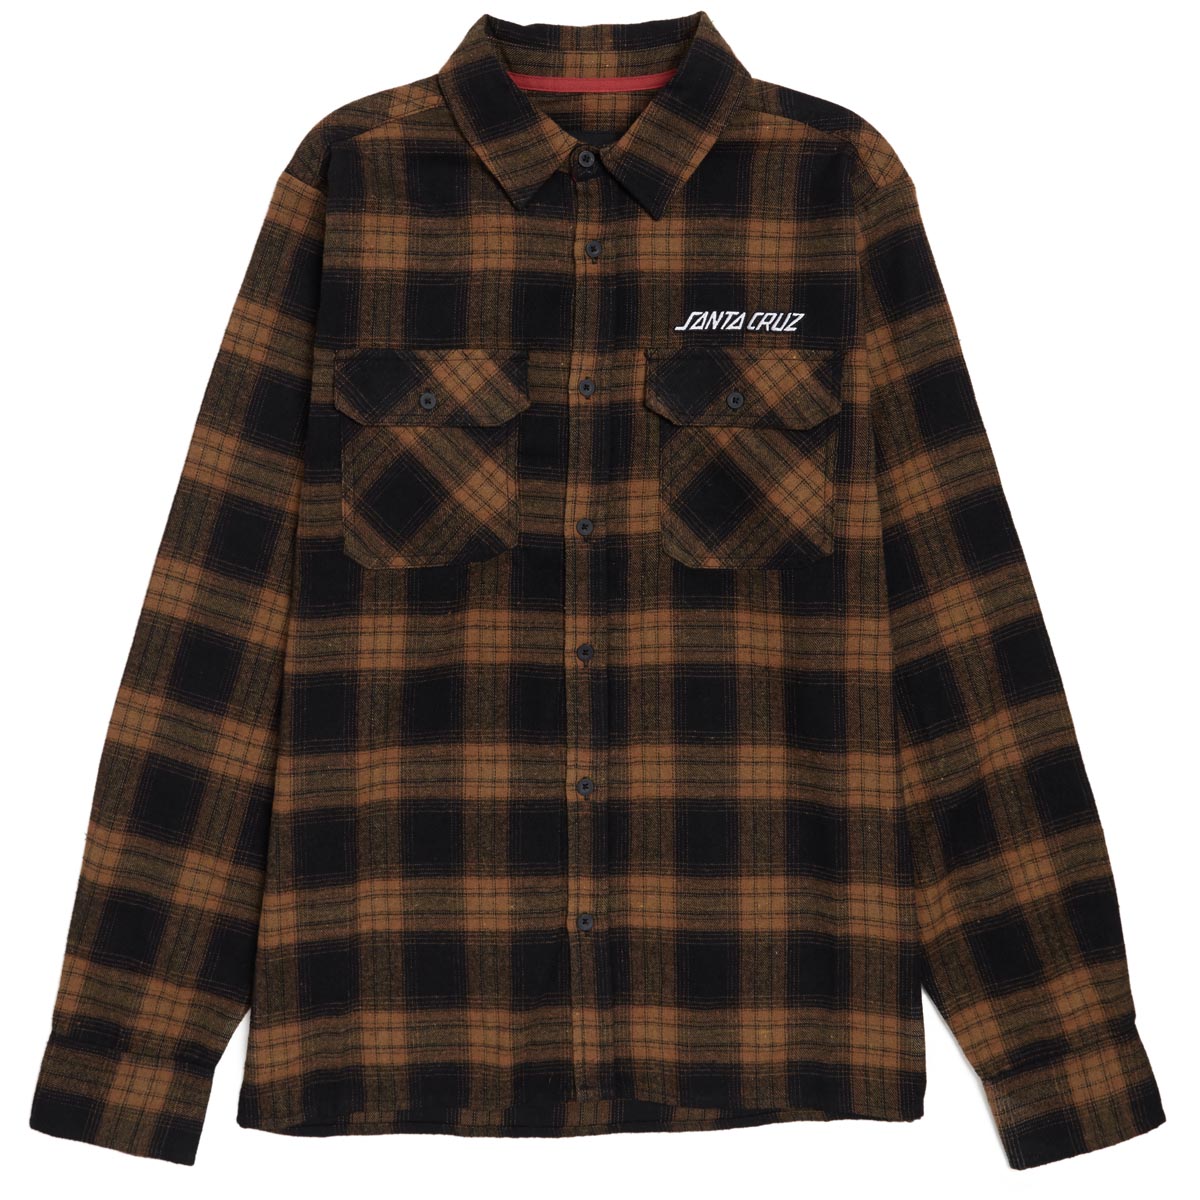 Santa Cruz Stone Flannel Long Sleeve Shirt - Black/Brown image 1